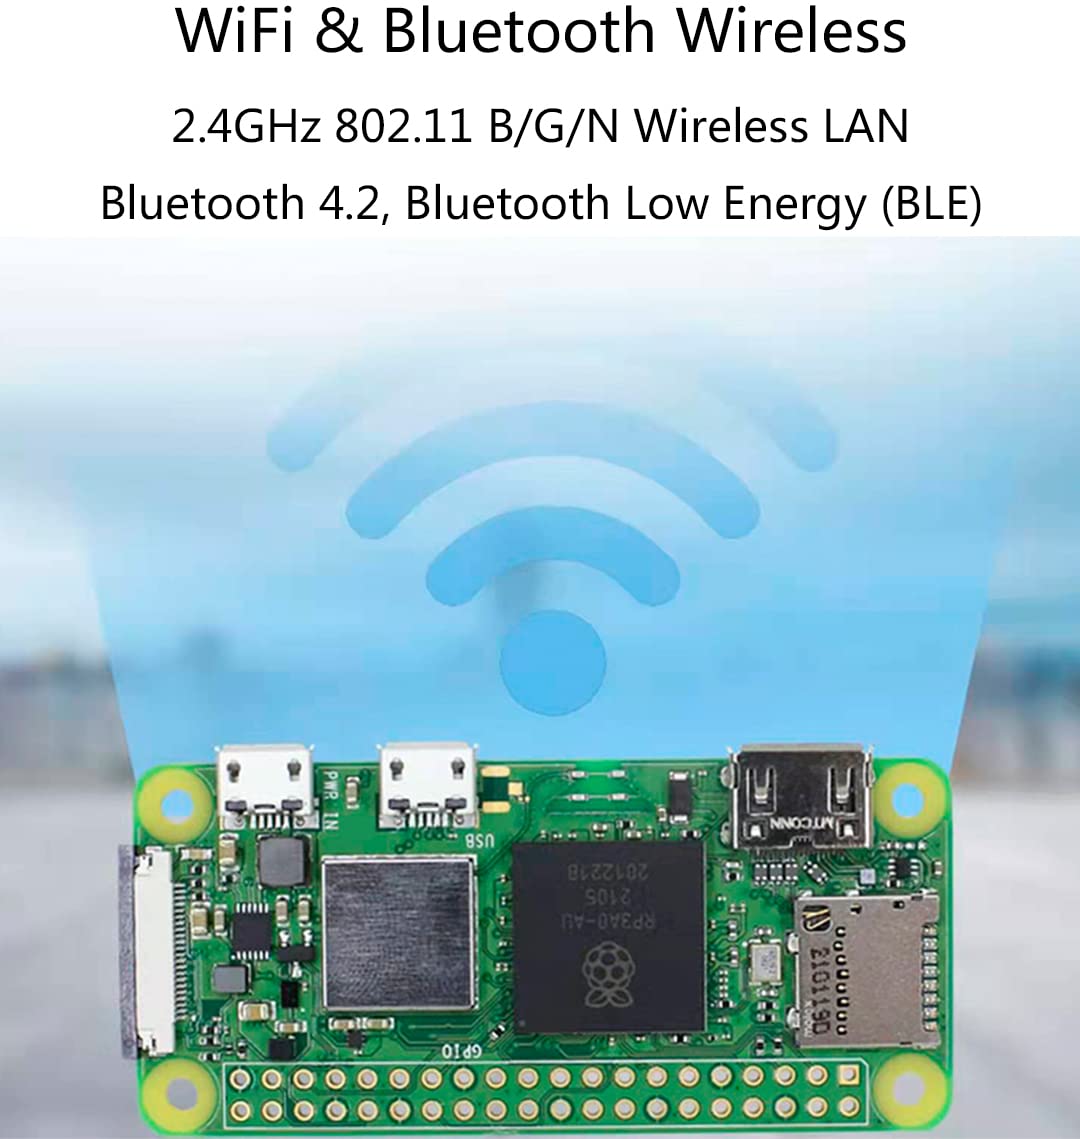 Raspberry Pi Zero 2 W with Pre-Soldered Header,Five Times as Fast, 1GHz Quad-Core 64-bit Arm Cortex-A53 CPU, 512MB LPDDR2 SDRAM 2.4GHz 802.11 b/g/n Wireless LAN, WiFi Bluetooth 4.2 BLE